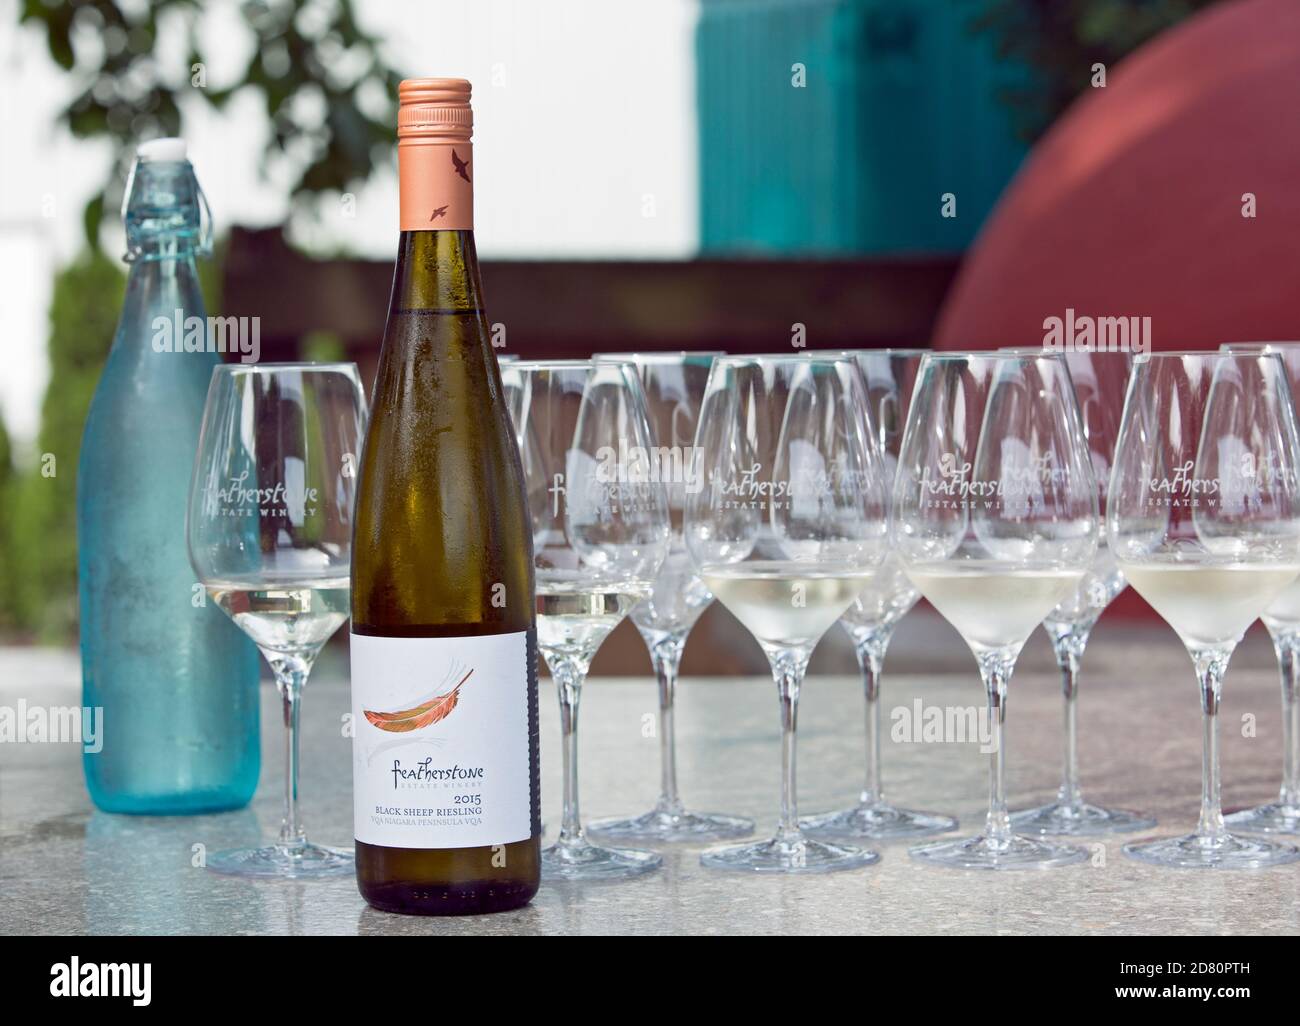 Canada,Ontario,Vineland Featherstone Estate Winery, Black Sheep Riesling, wine tasting set up Stock Photo